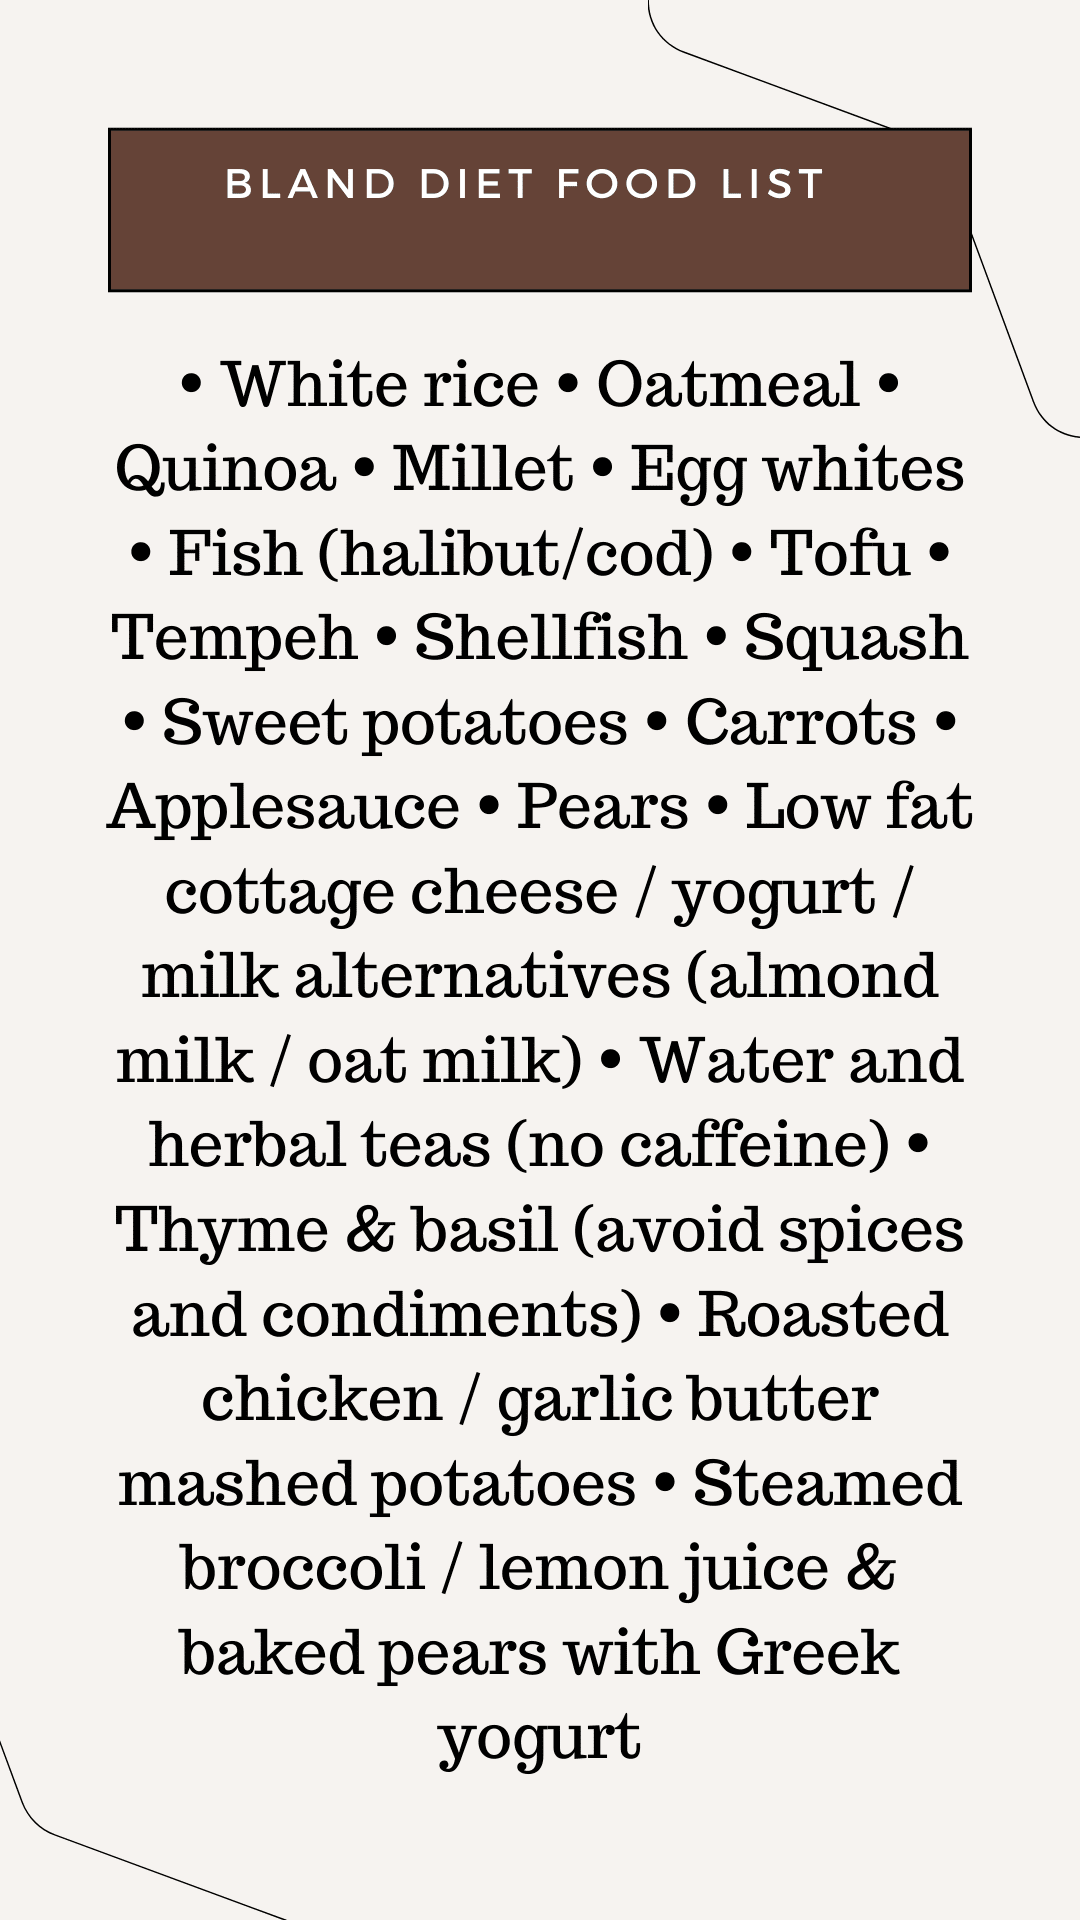 Bland diet food list (pdf) 